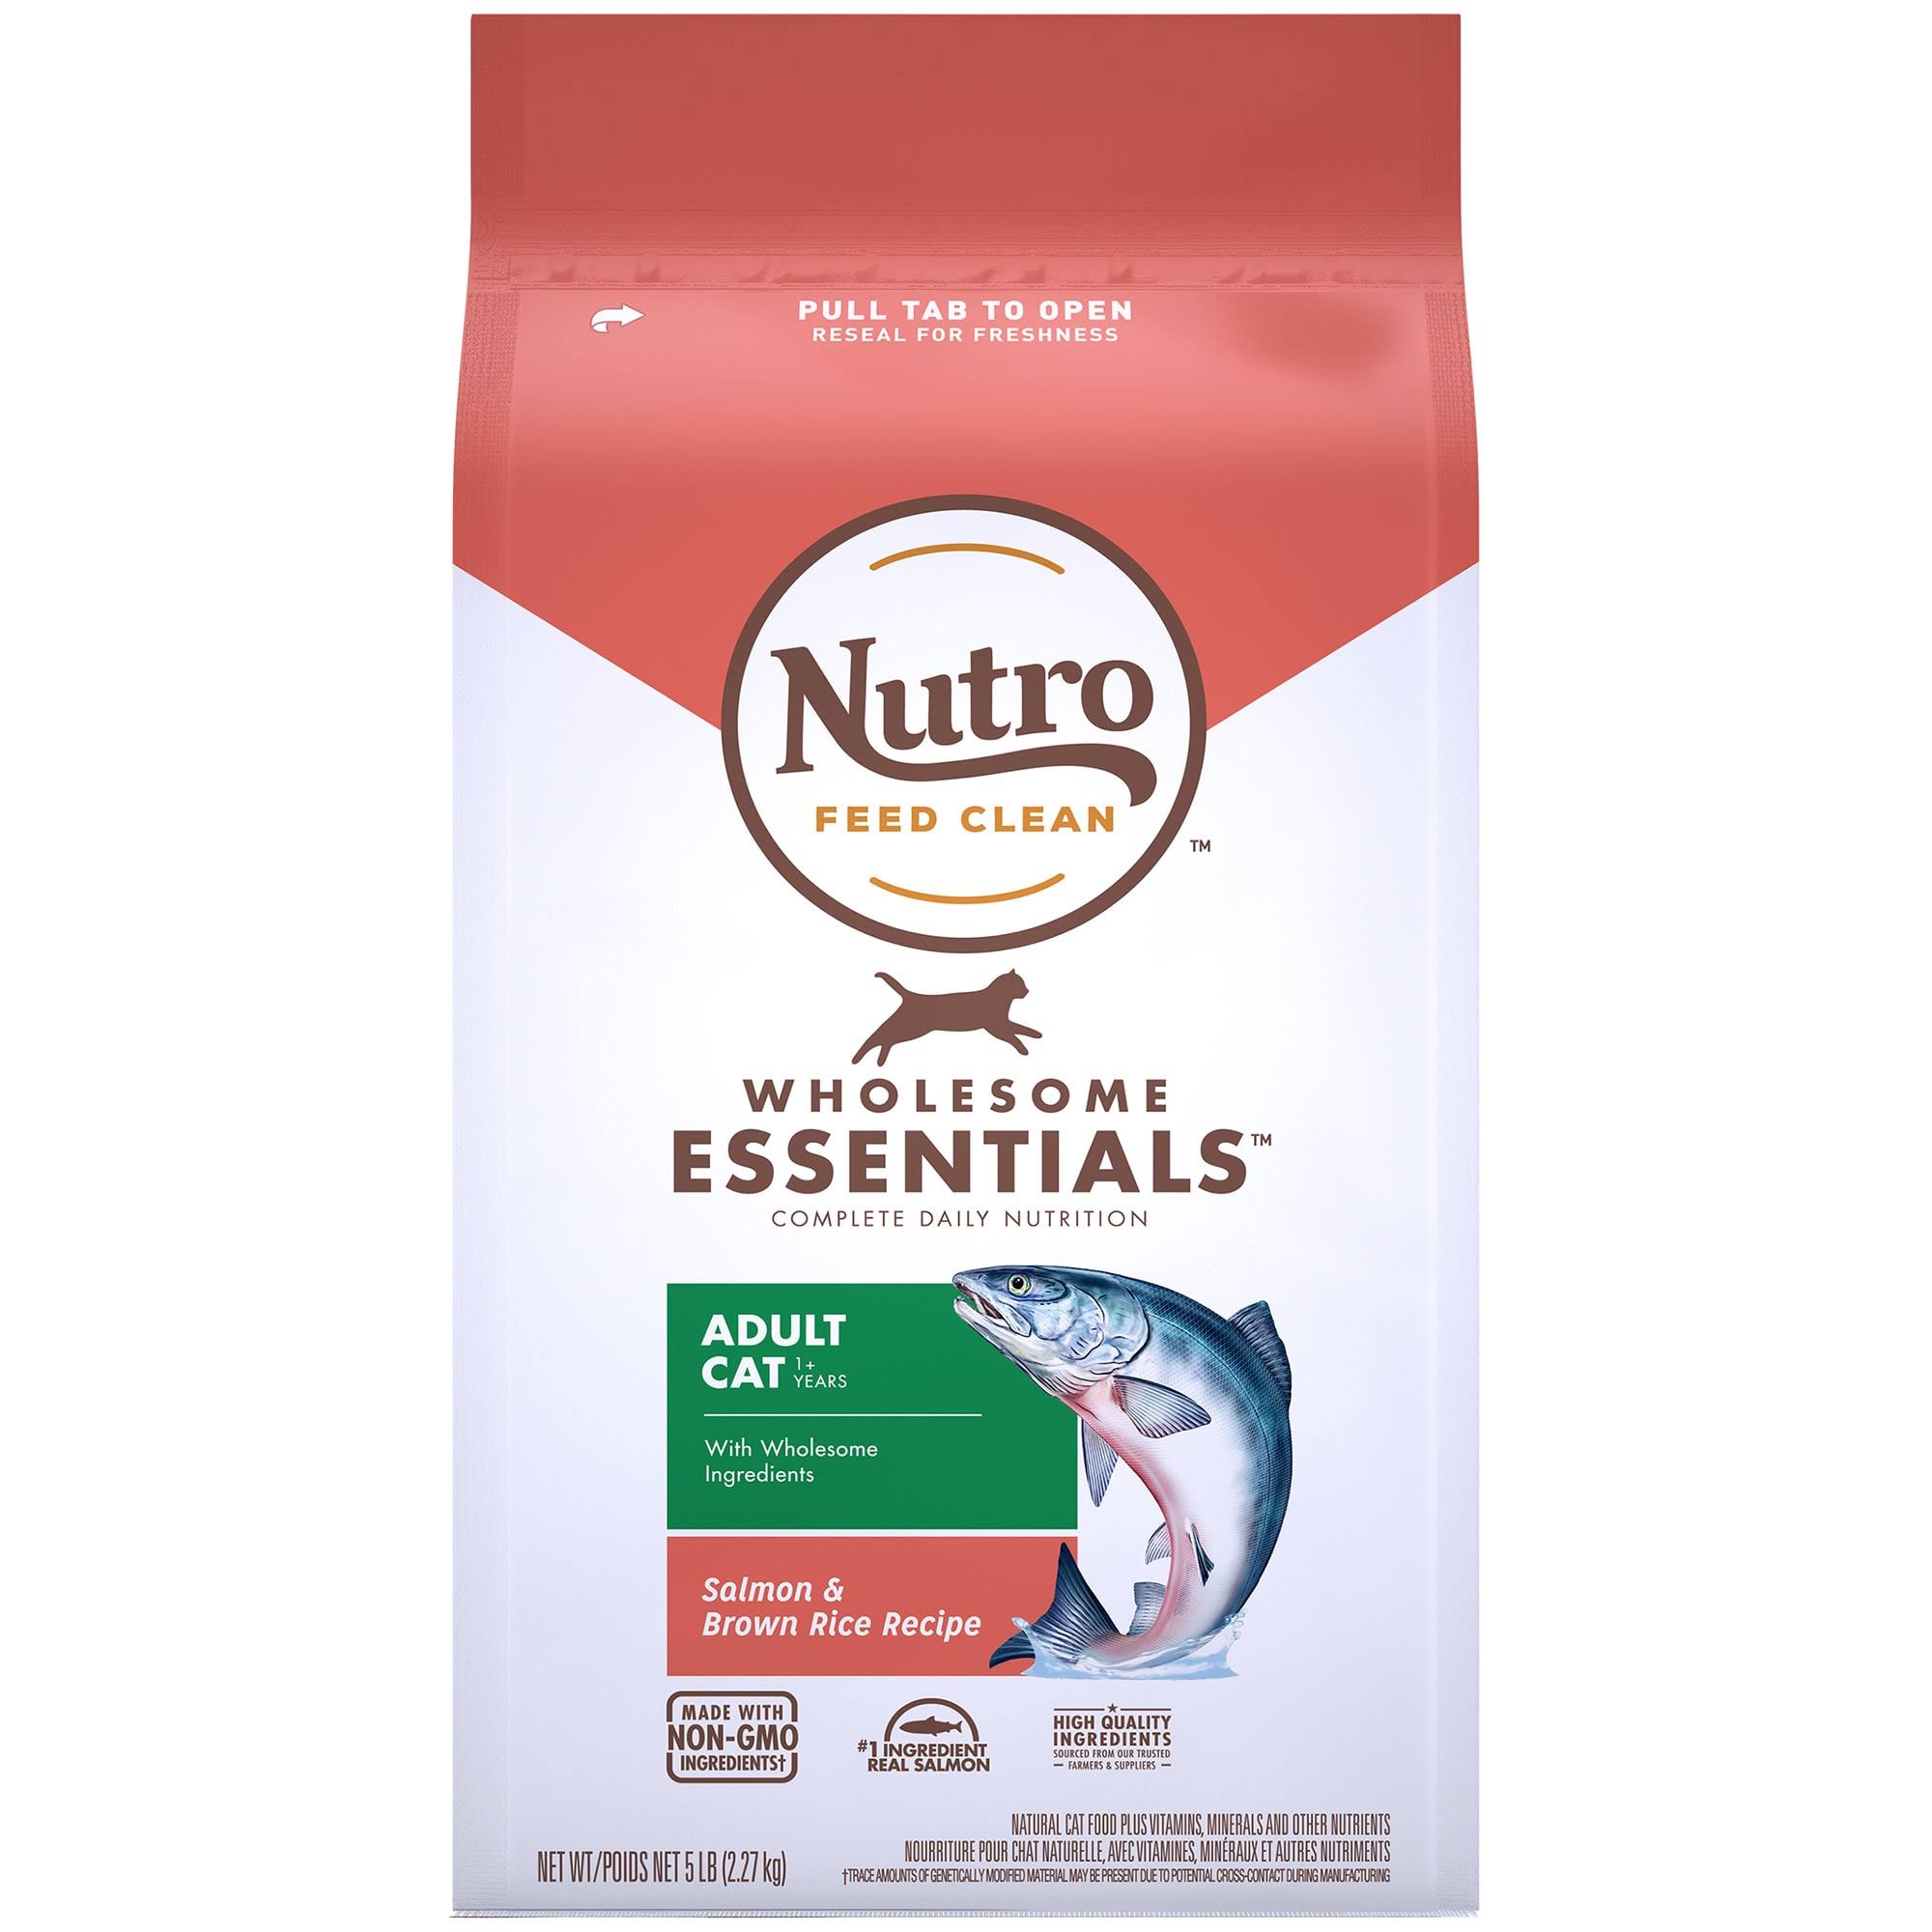 Nutro Wholesome Essentials Natural Dry Cat Food, Adult Cat Salmon & Brown Rice Recipe Cat Kibble, 5 LB Bag